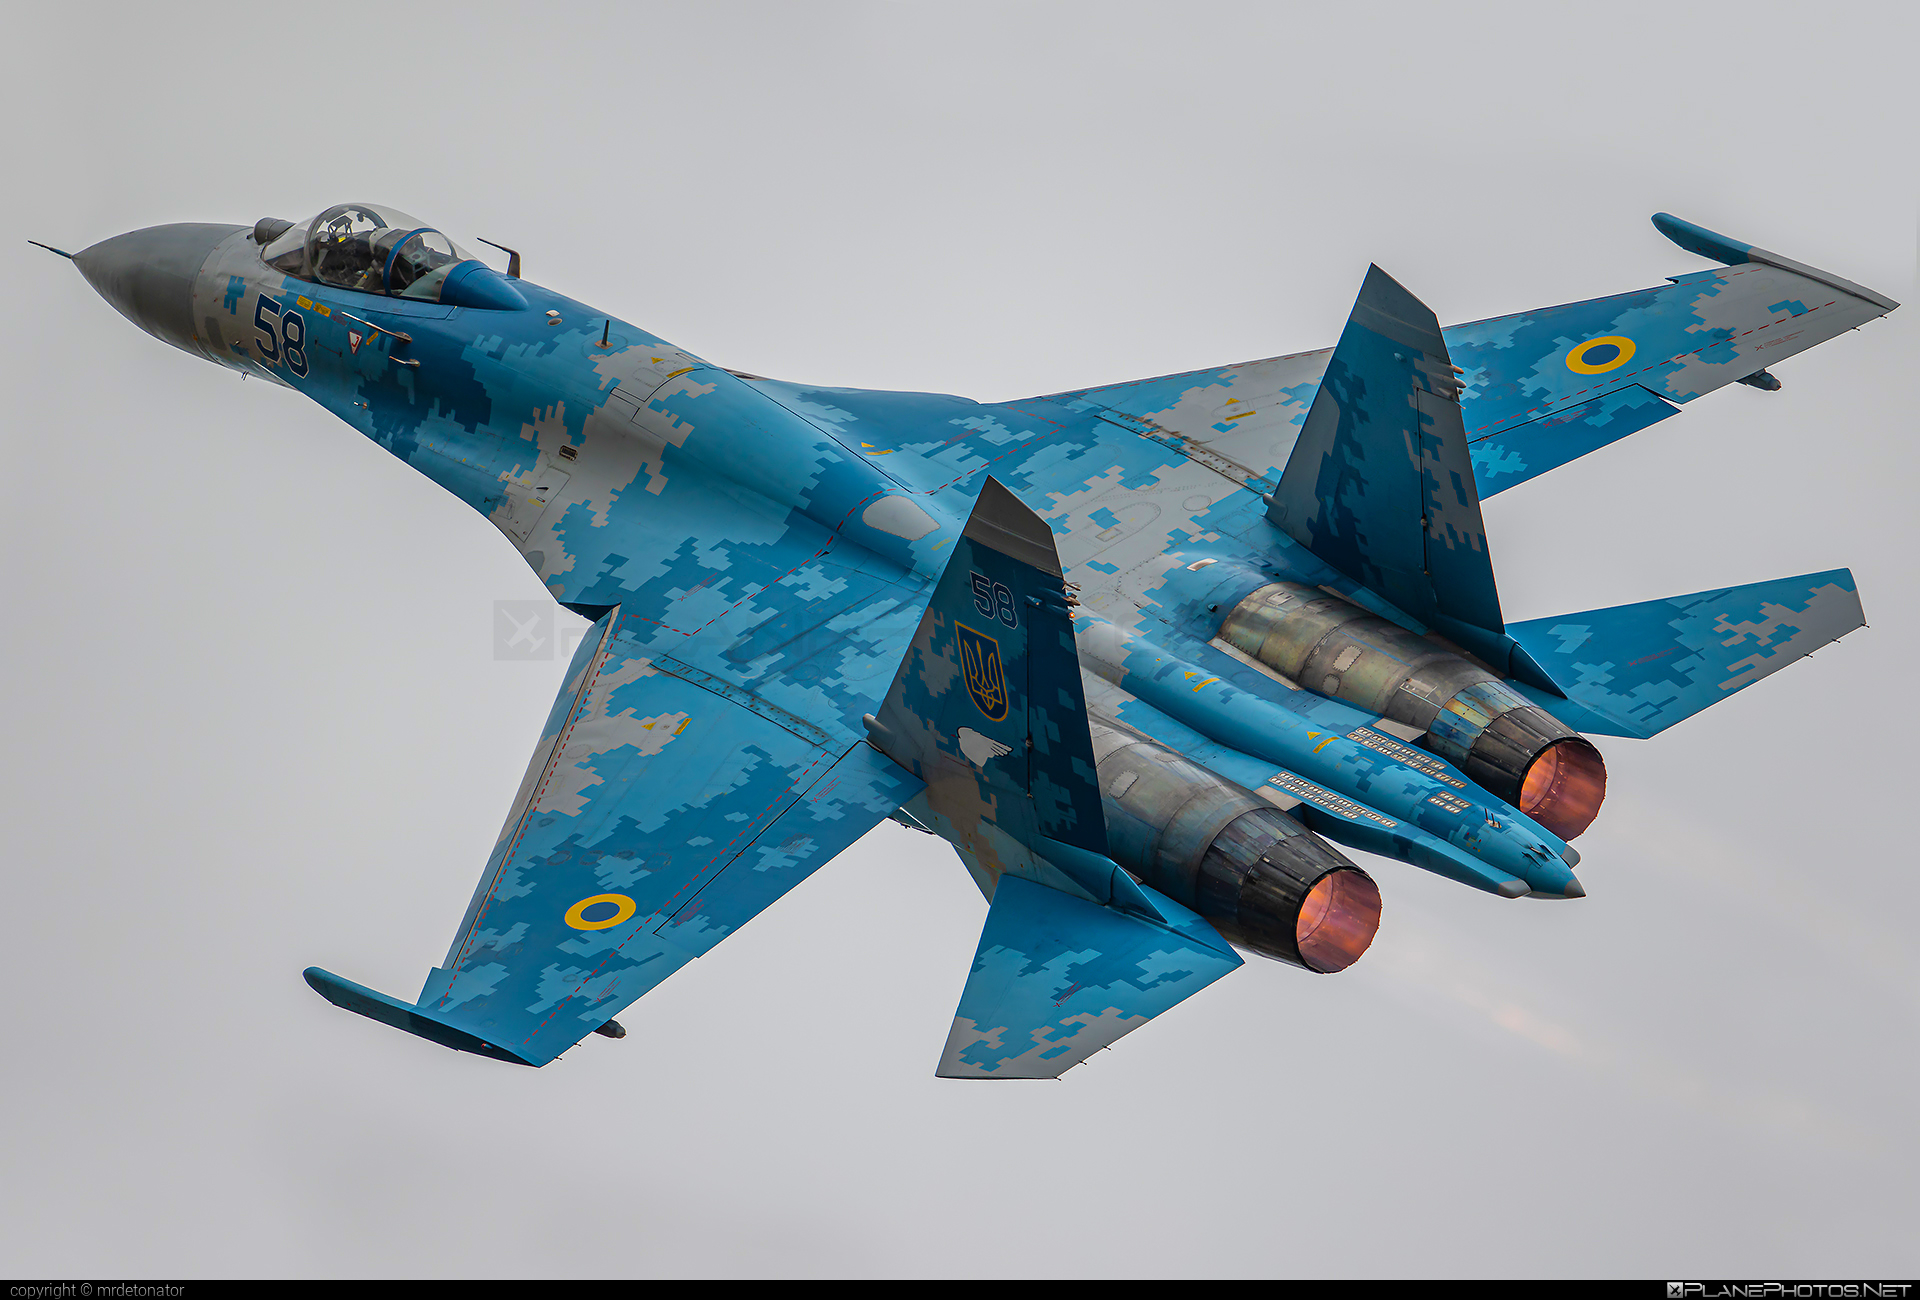 Sukhoi Su-27P - 58 operated by Povitryani Syly Ukrayiny (Ukrainian Air Force) #povitryanisylyukrayiny #su27 #su27p #sukhoi #sukhoi27 #ukrainianairforce